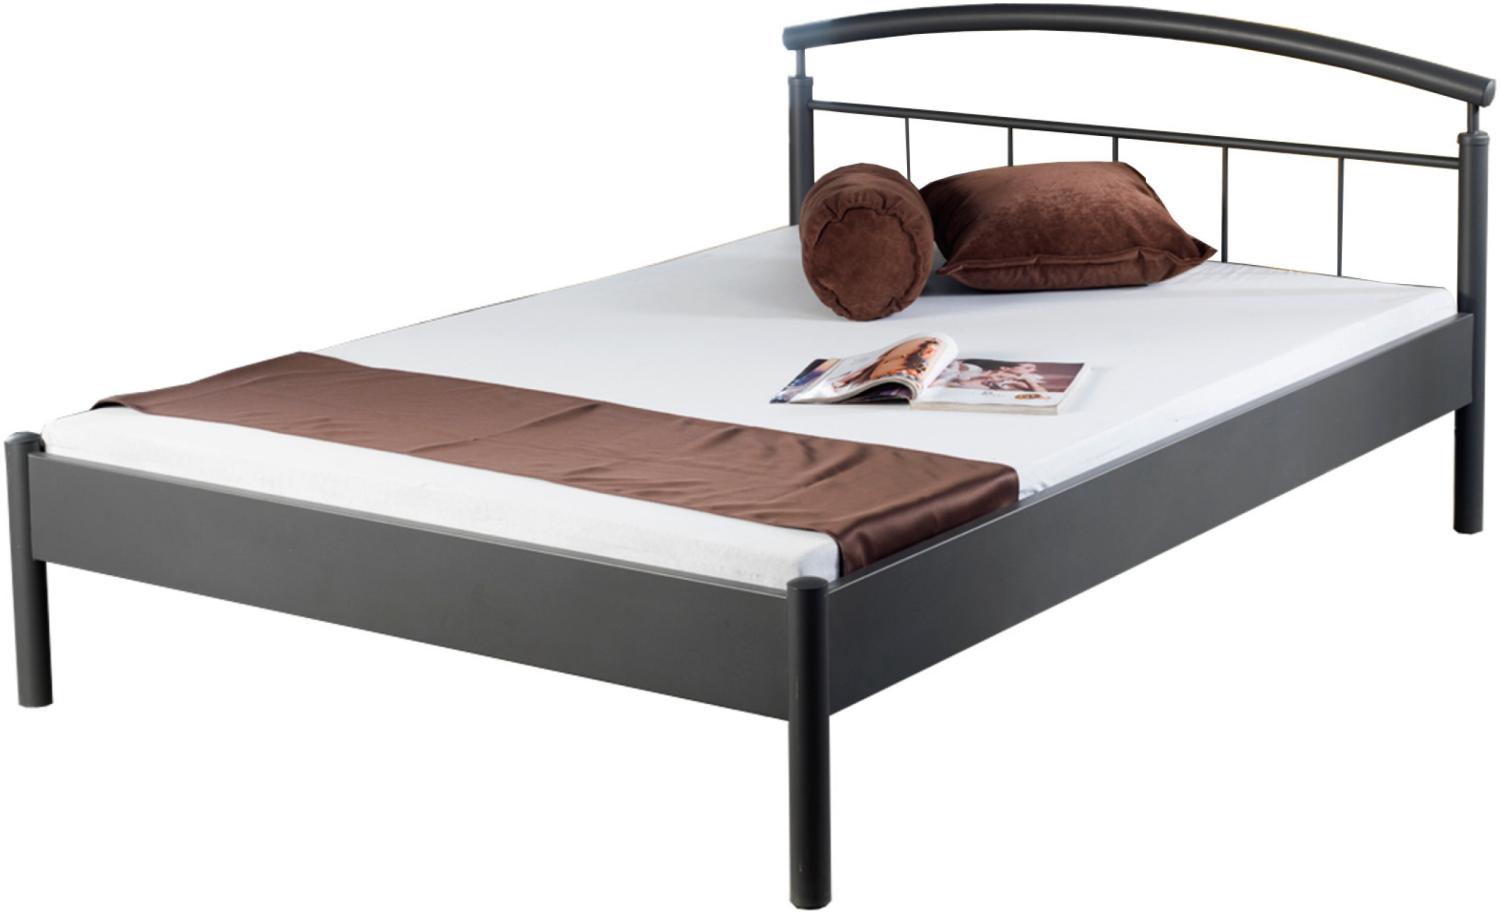 Bed Box 'Nina 1007' Bettrahmen Metall, Bettgestell, 180x220cm Bild 1